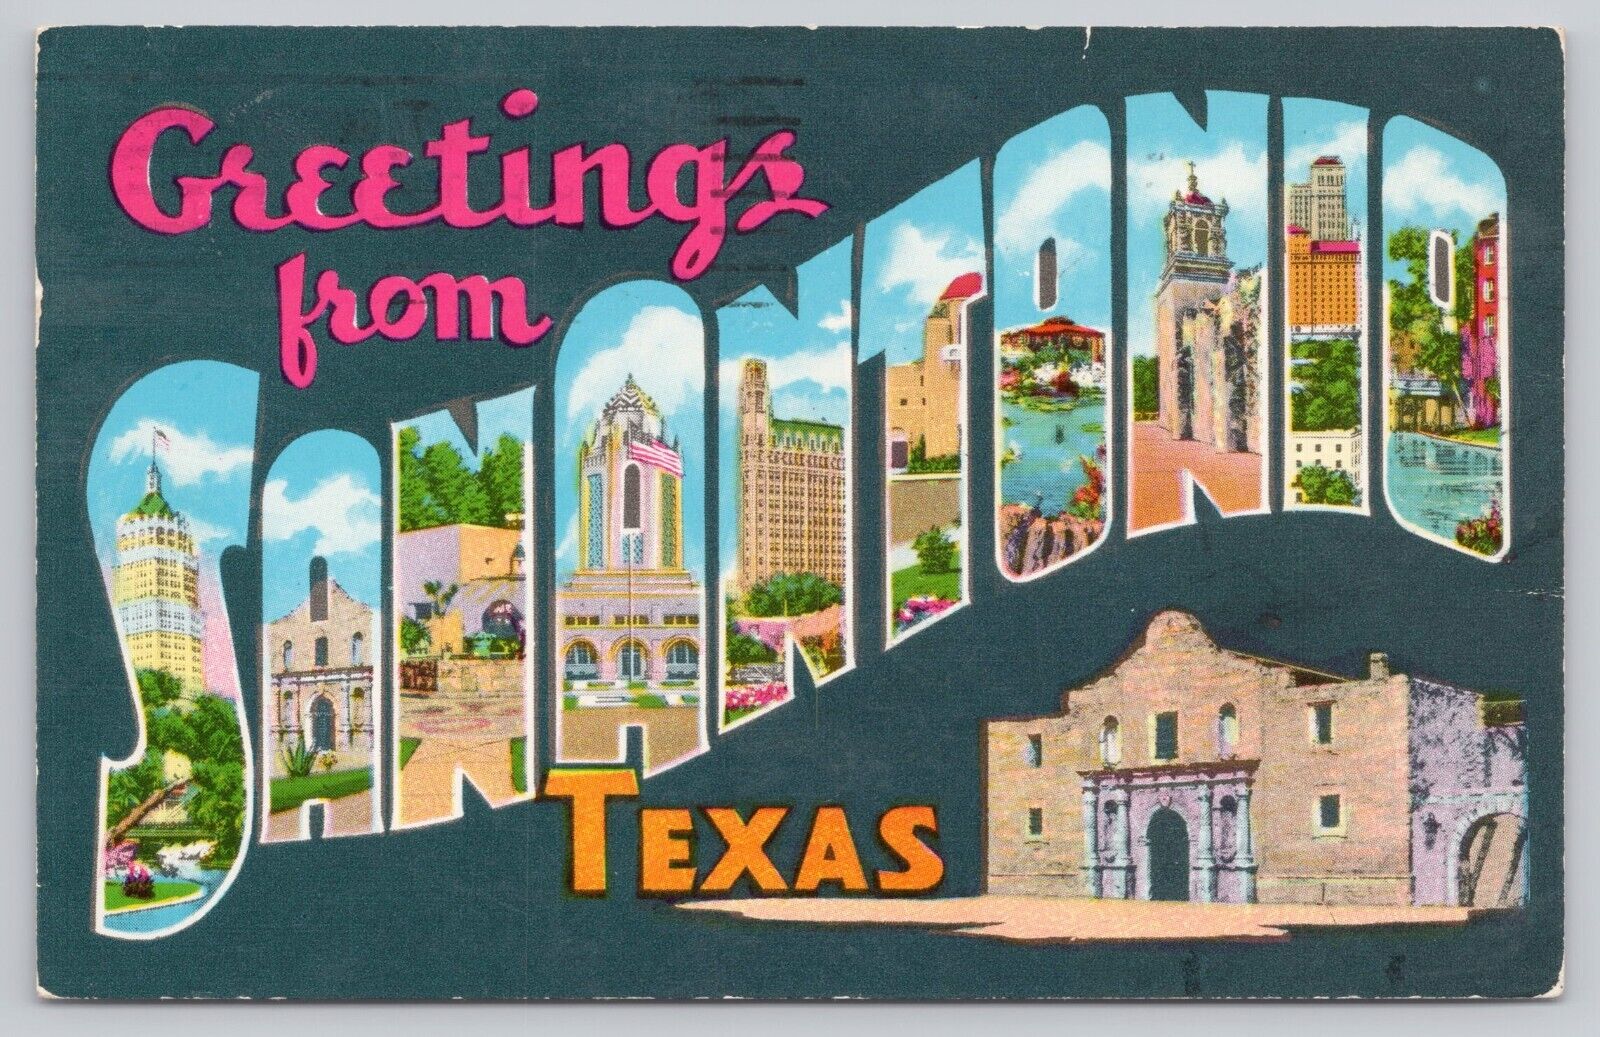 San Antonio Texas, Large Letter Greetings, The Alamo, Vintage Postcard